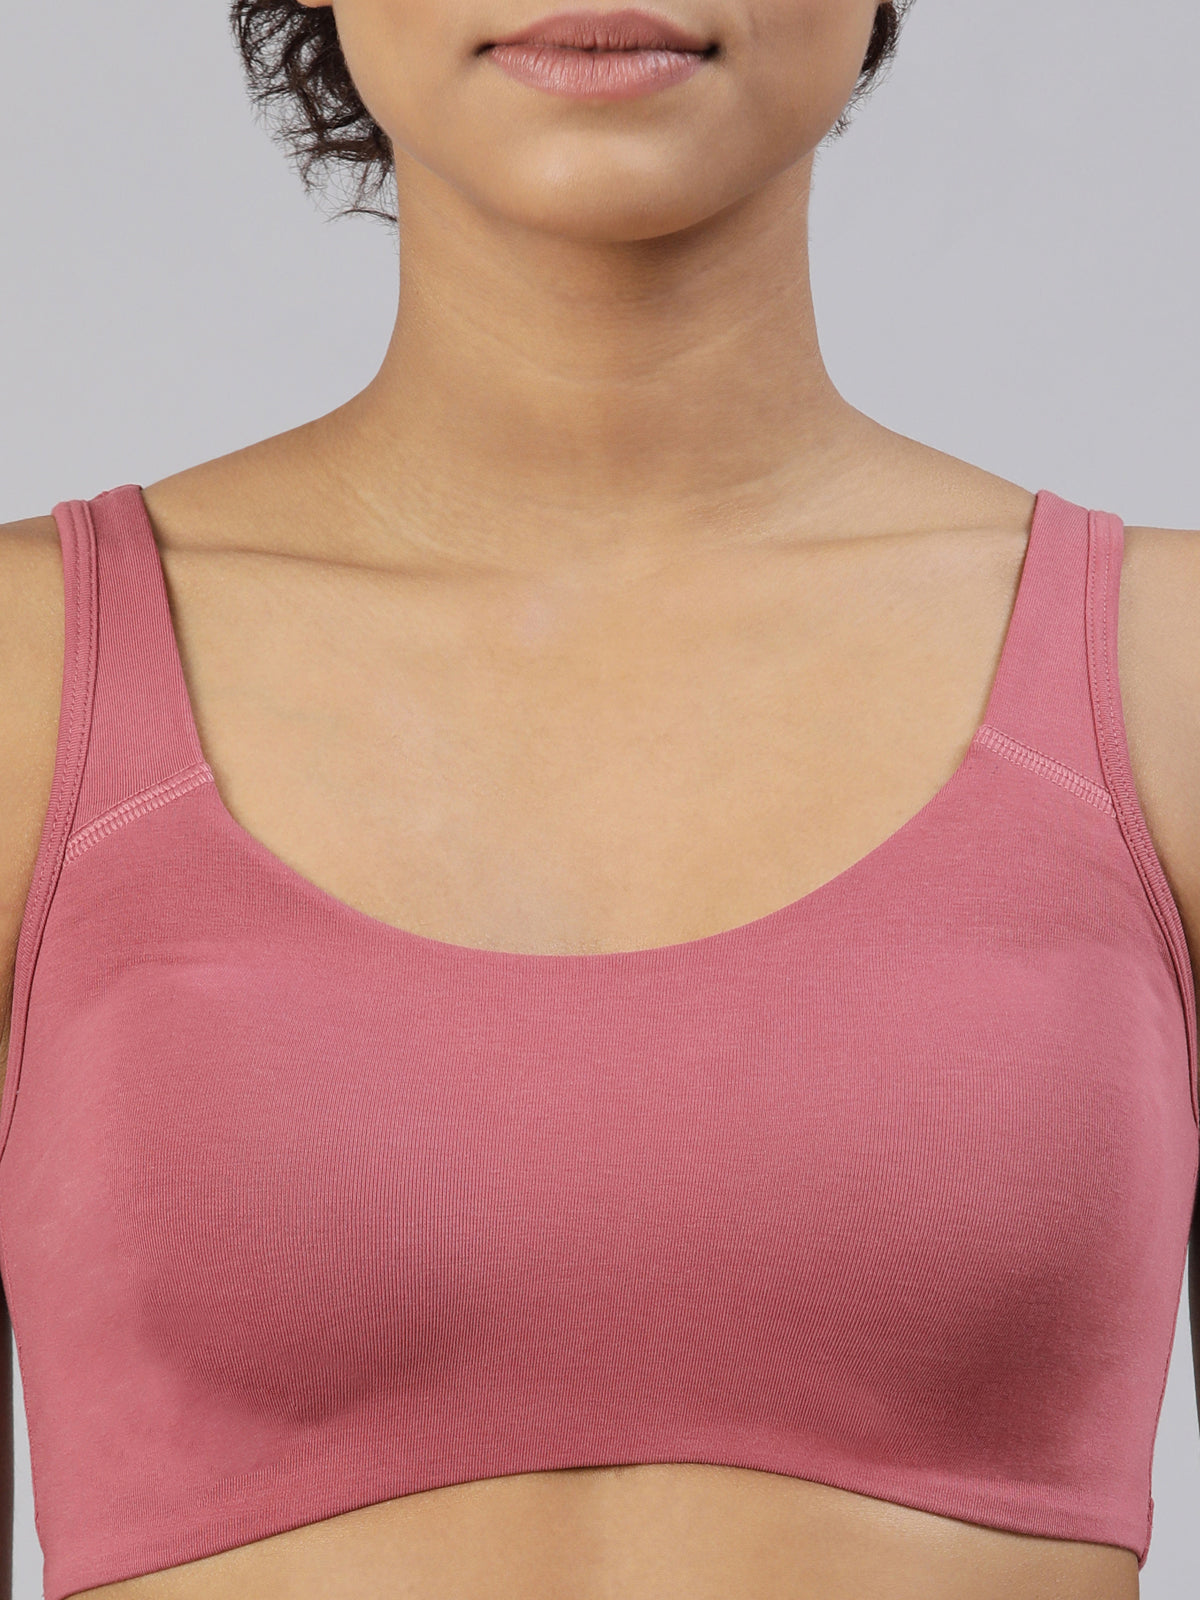 blossom-aesthetic bra-rose gold2-anti microbial treated fabric-everyday bra